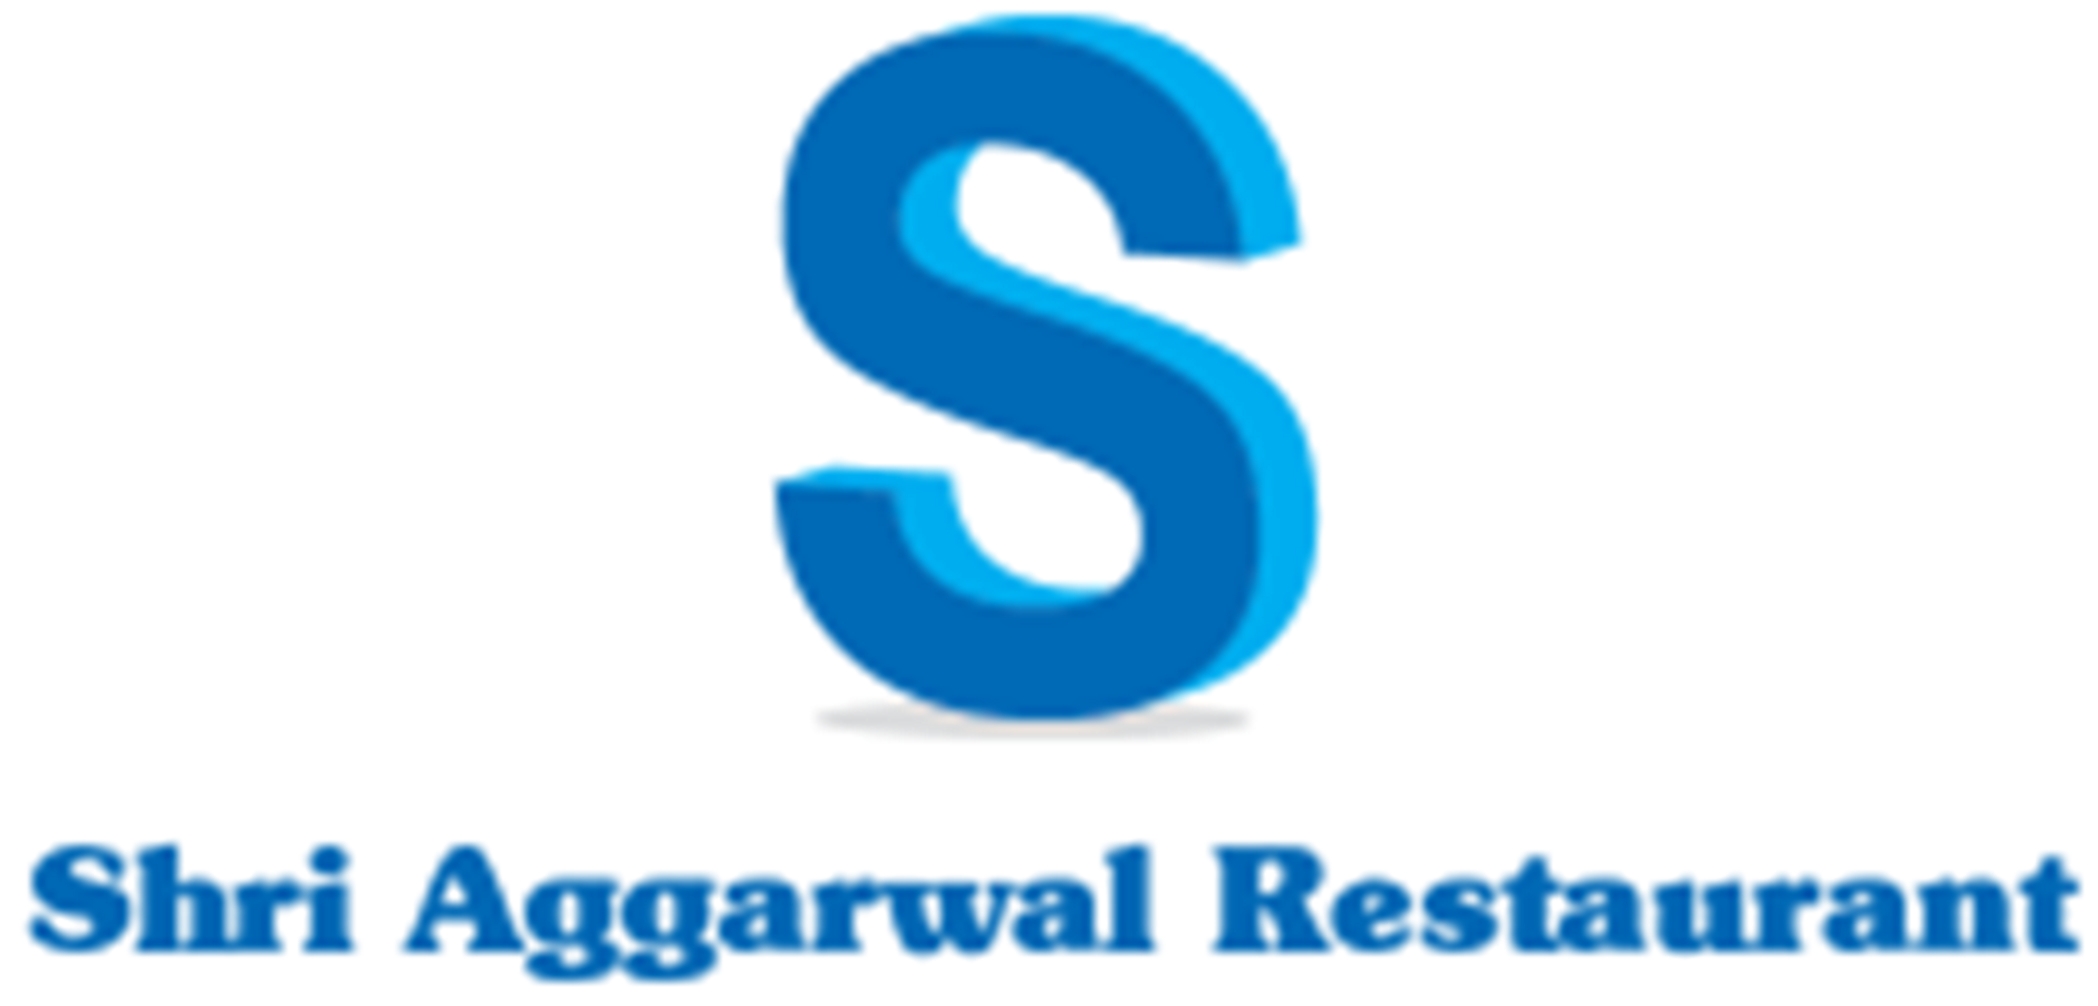 Shri Aggarwal Restaurant